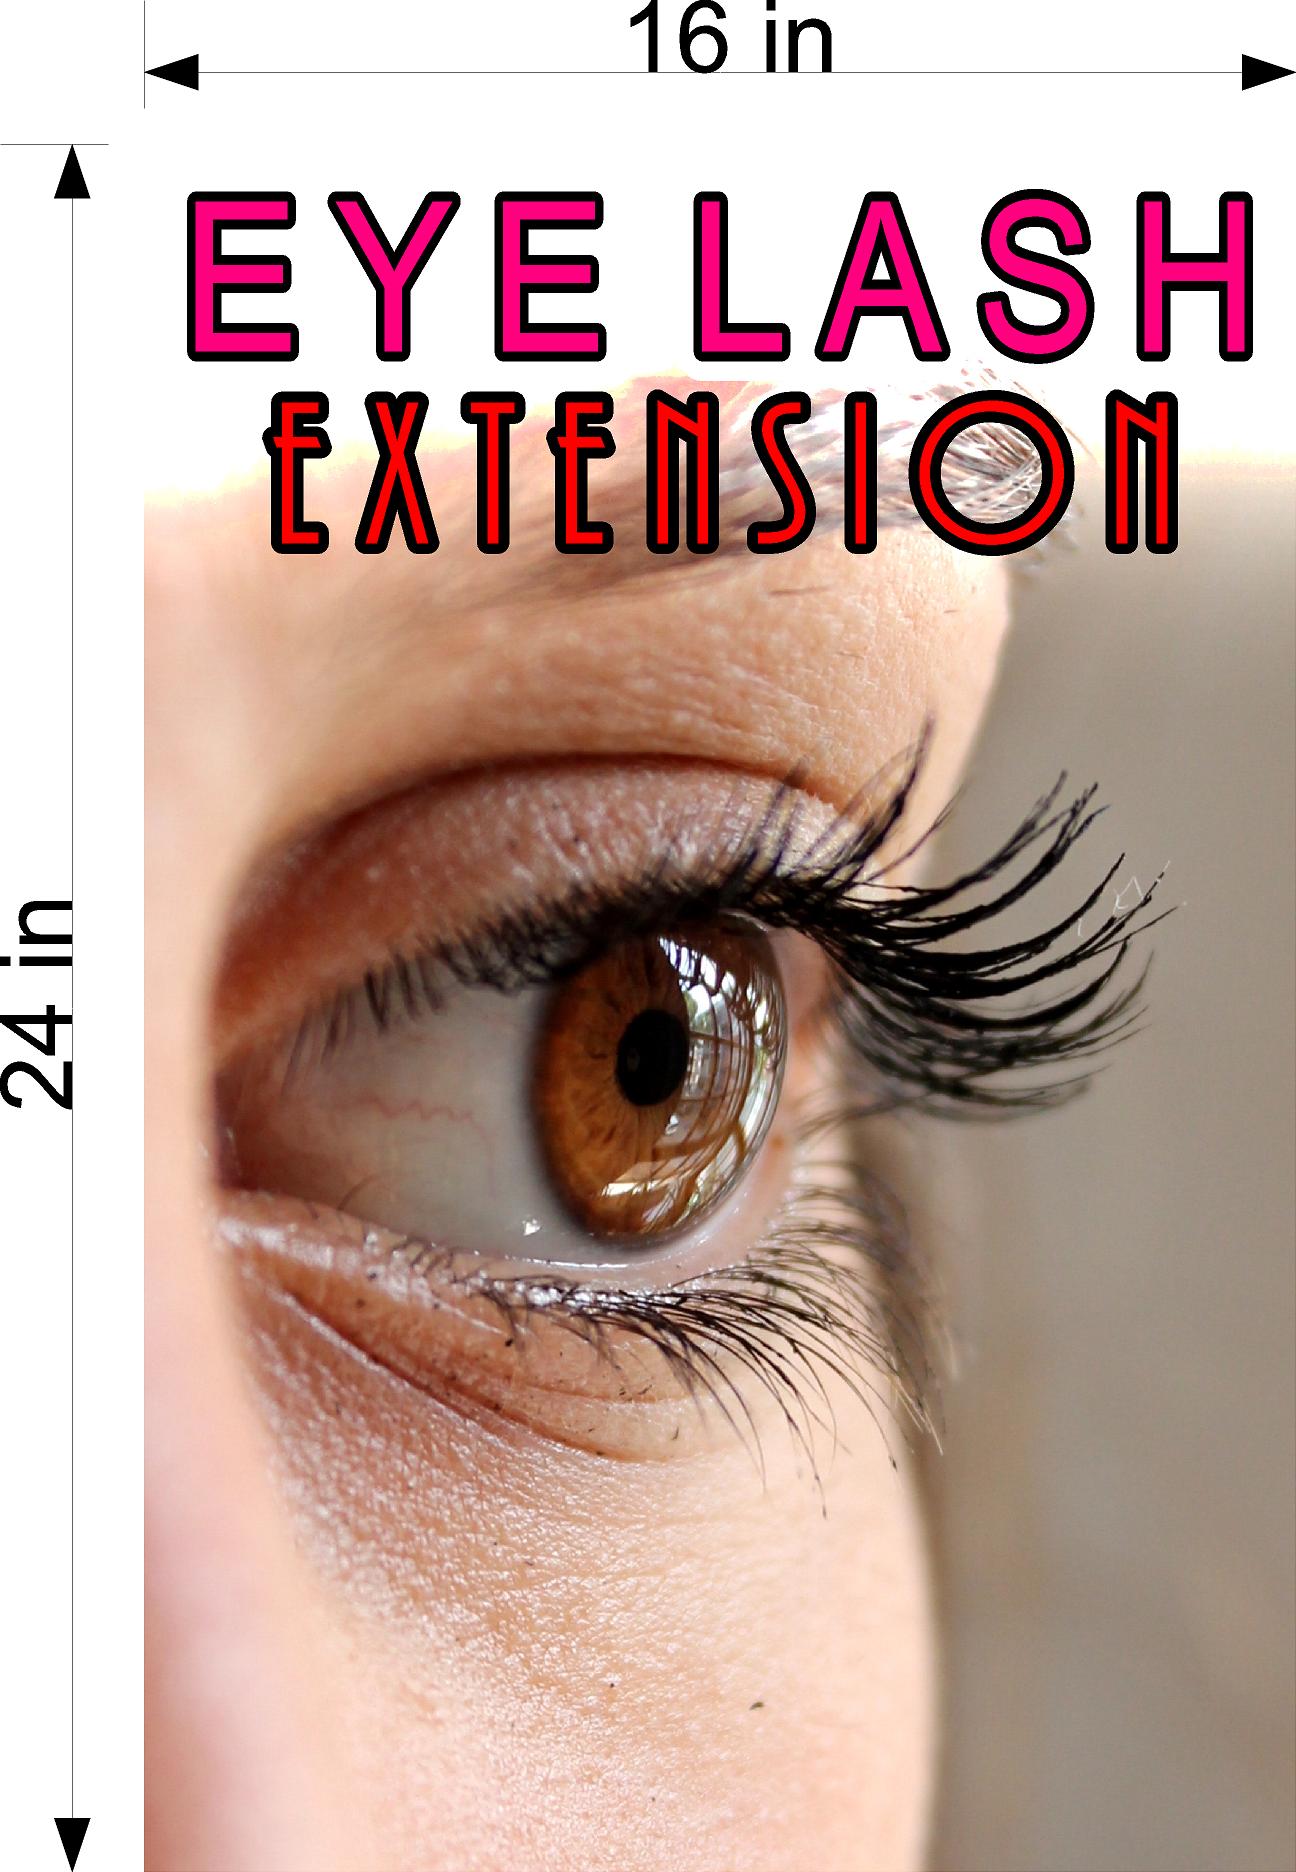 Eyelash 05 Photo-Realistic Paper Poster Premium Interior Sign Wall Window Non-Laminated Extension Eyelashes Vertical